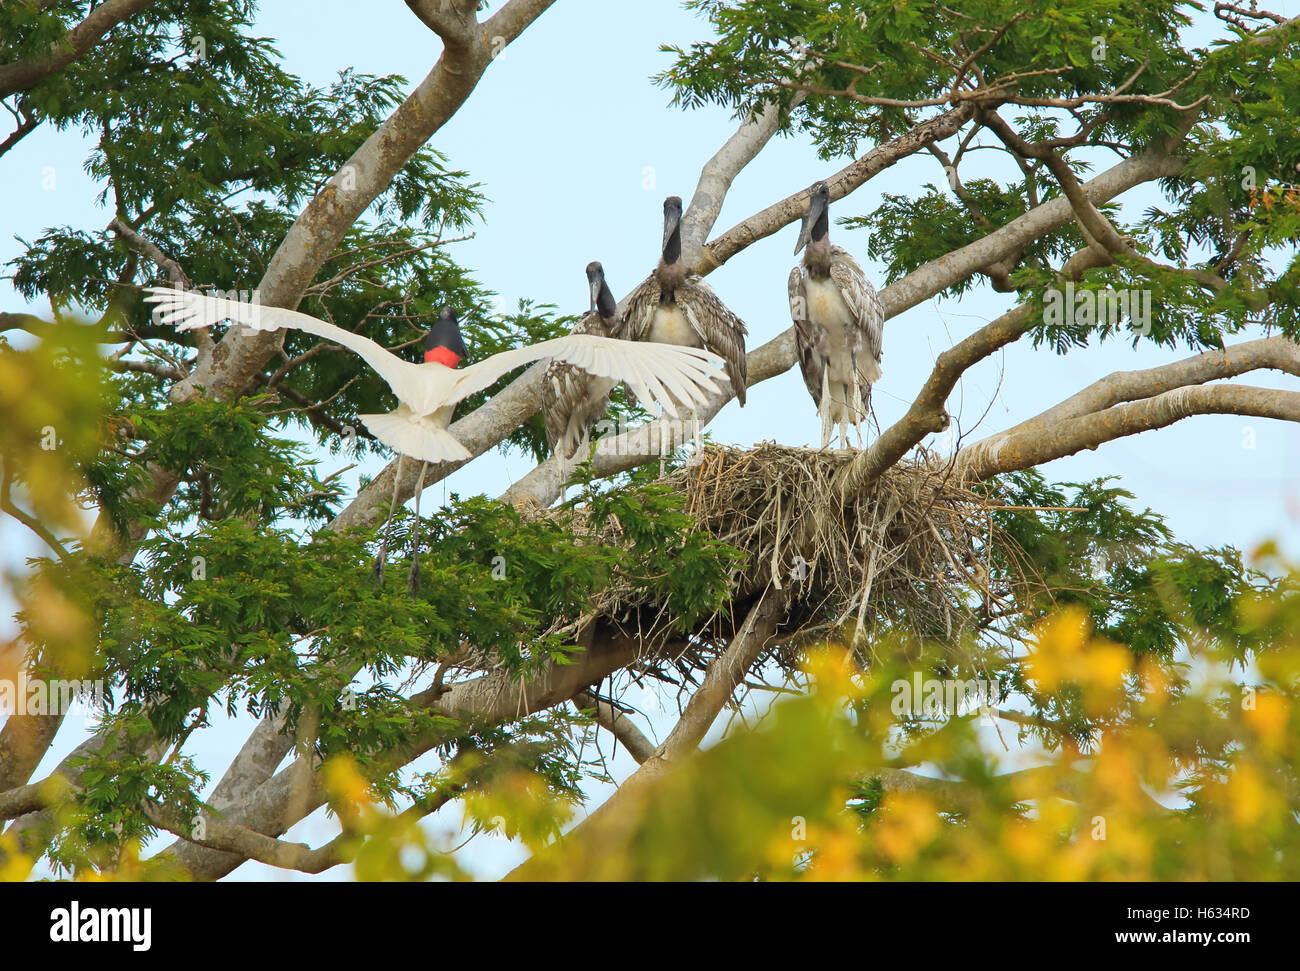 Adult jabiru (Jabiru mycteria) and offspring at nest. Tropical dry forest, Palo Verde National Park, Guanacaste, Costa Rica. Stock Photo